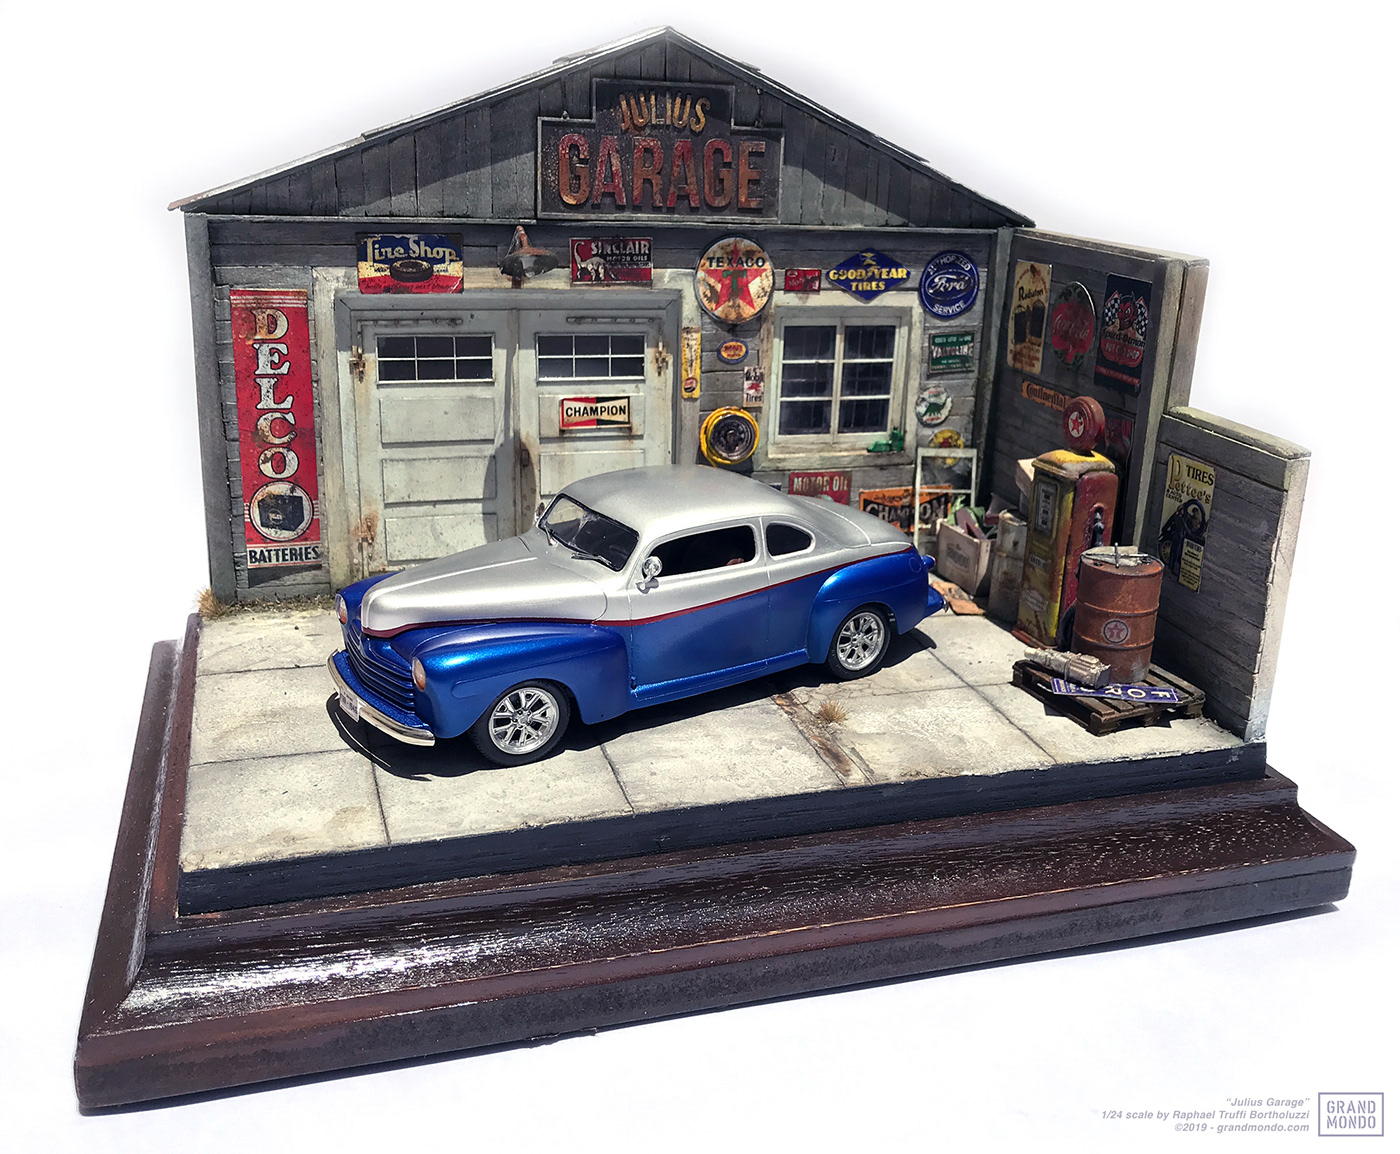 scale model miniature art automotive   concept Diorama handmade grandmondo bortholuzzi abandoned vintage